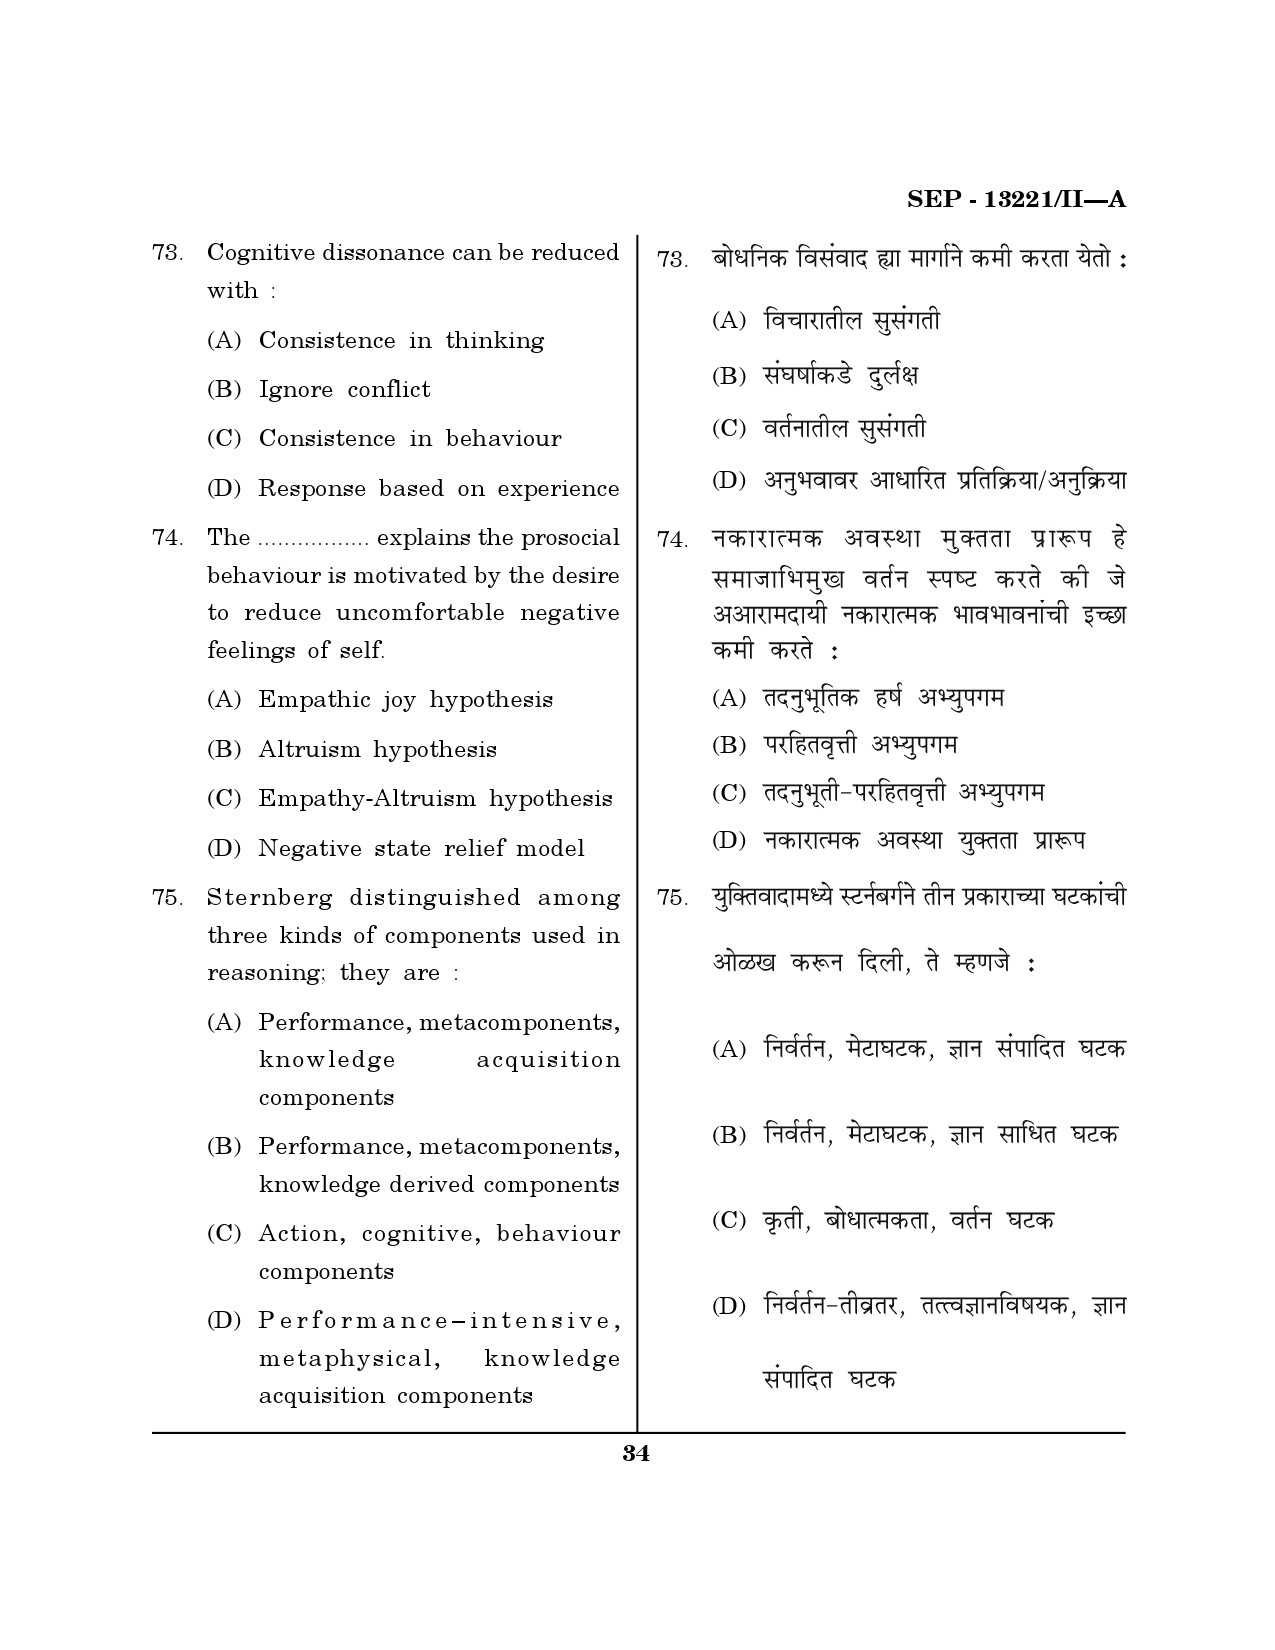 Maharashtra SET Psychology Exam Question Paper September 2021 33